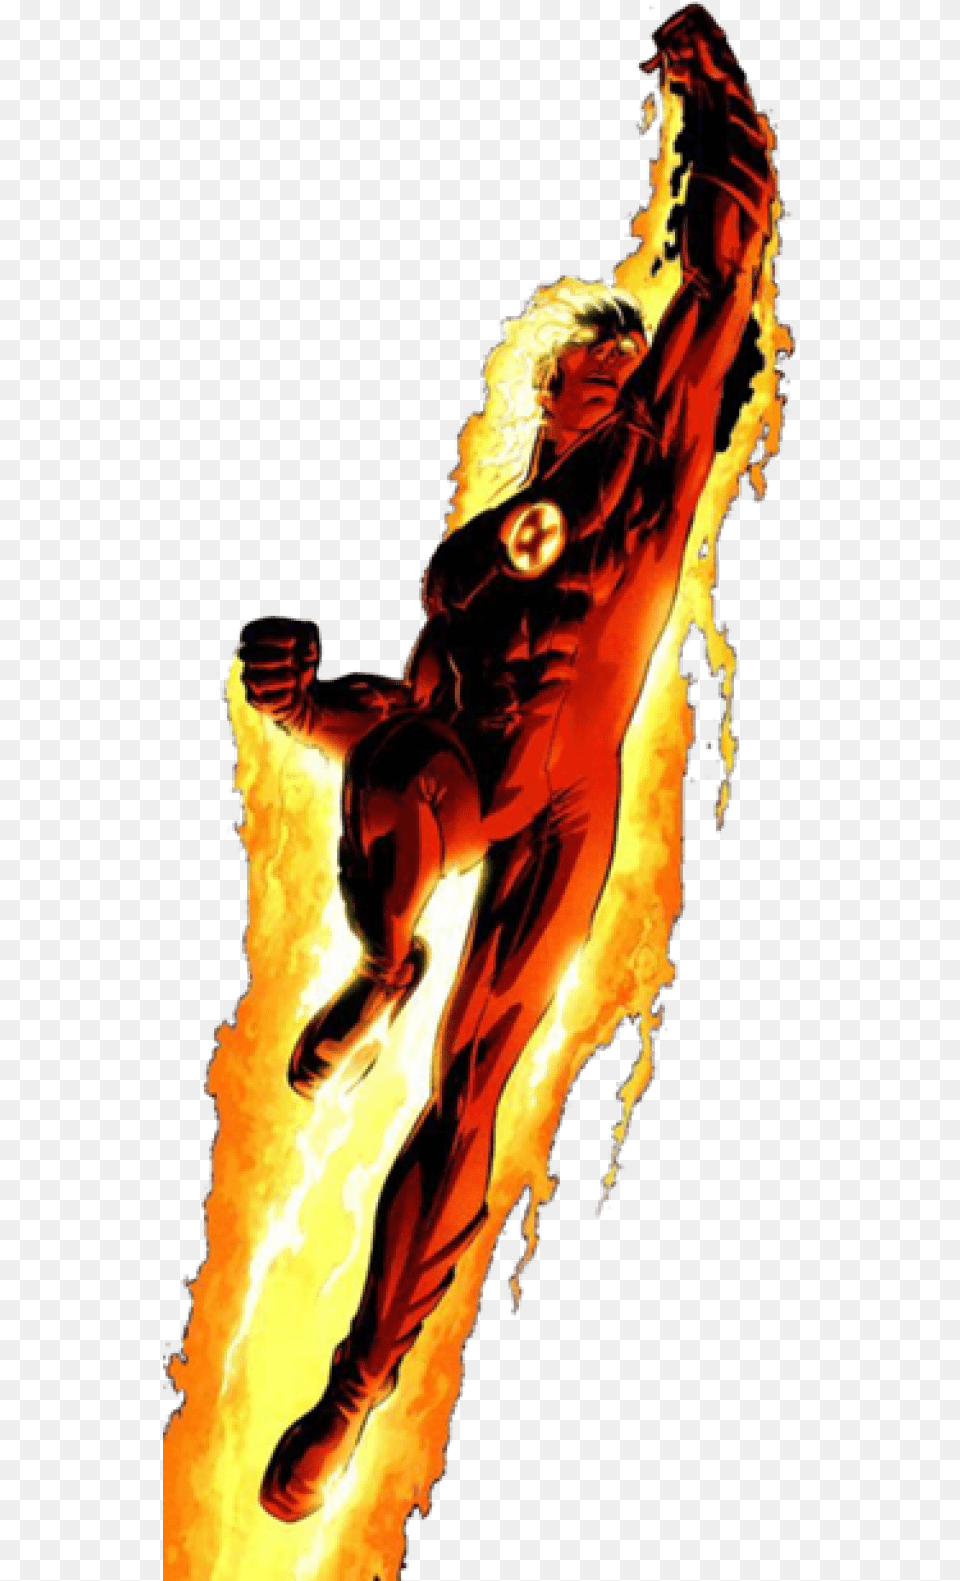 Marvel Fantastic Four Logo Images Gallery Marvel Human Torch Fantastic Four, Fire, Flame, Adult, Female Free Transparent Png